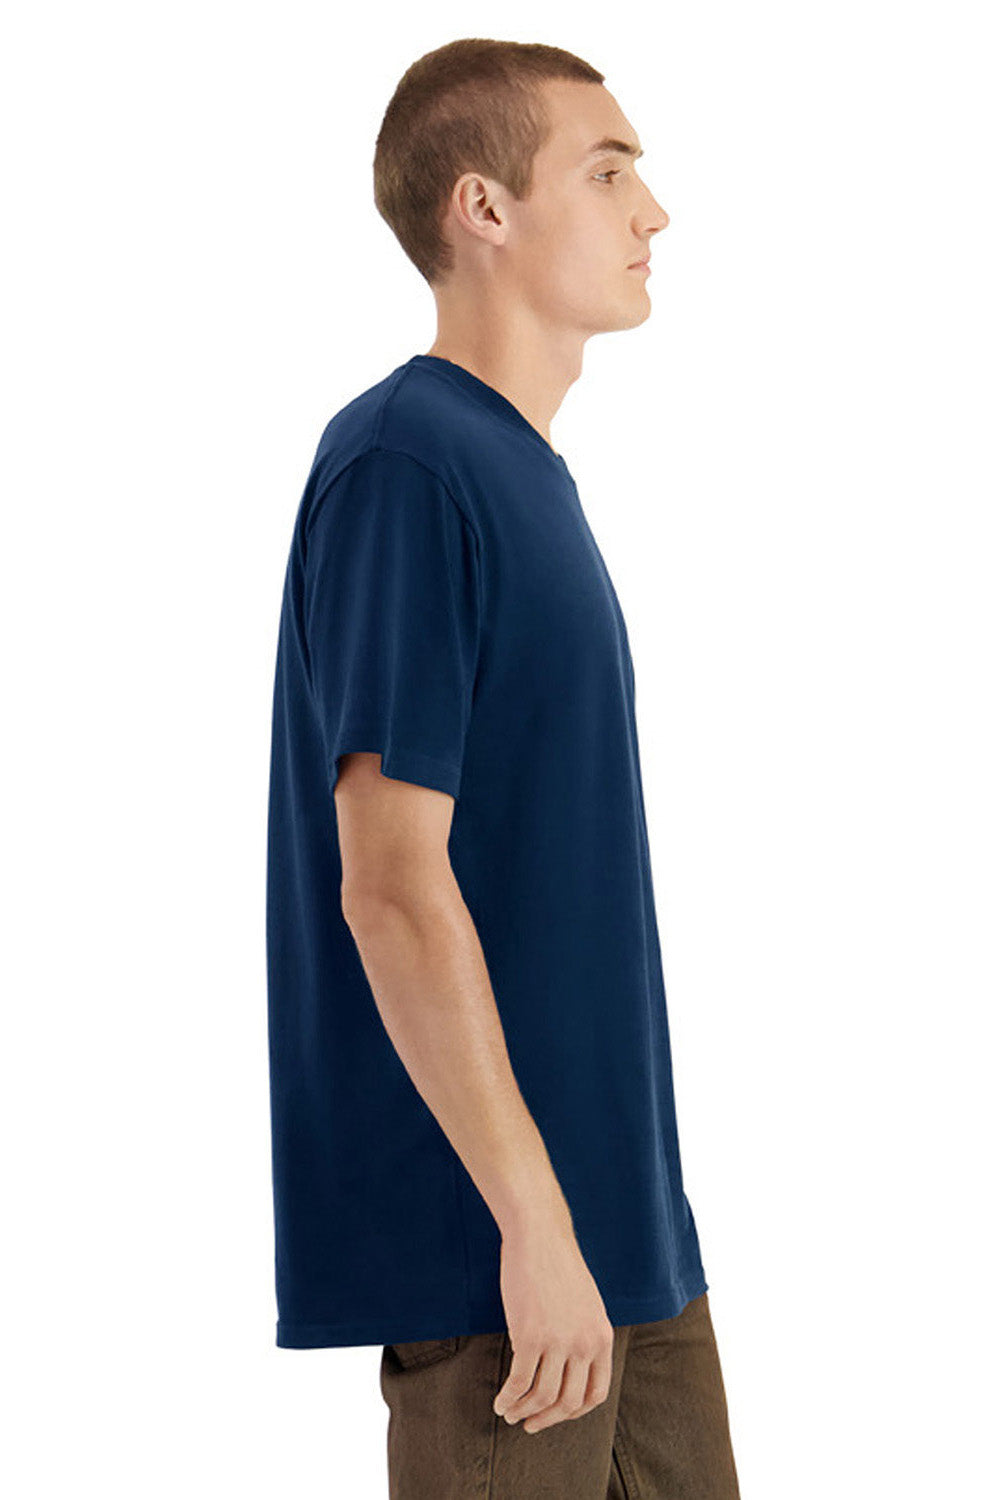 American Apparel 5389 Mens Sueded Cloud Short Sleeve Crewneck T-Shirt Navy Blue Model Side